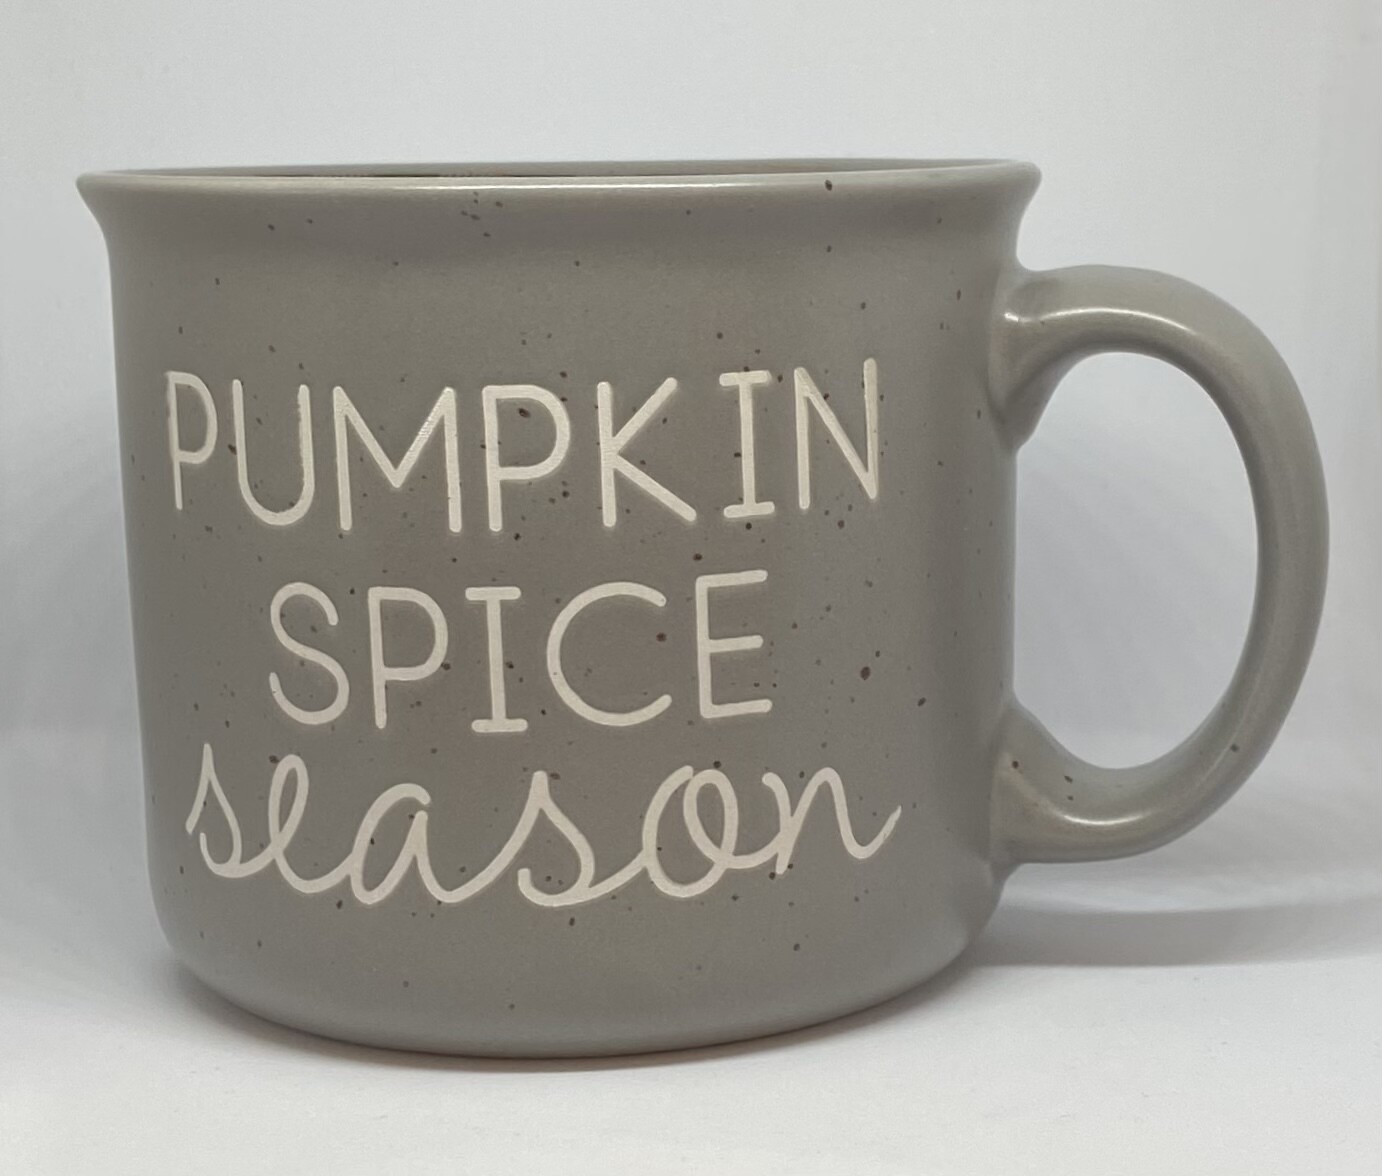 Pumpkin Spice Season Mug